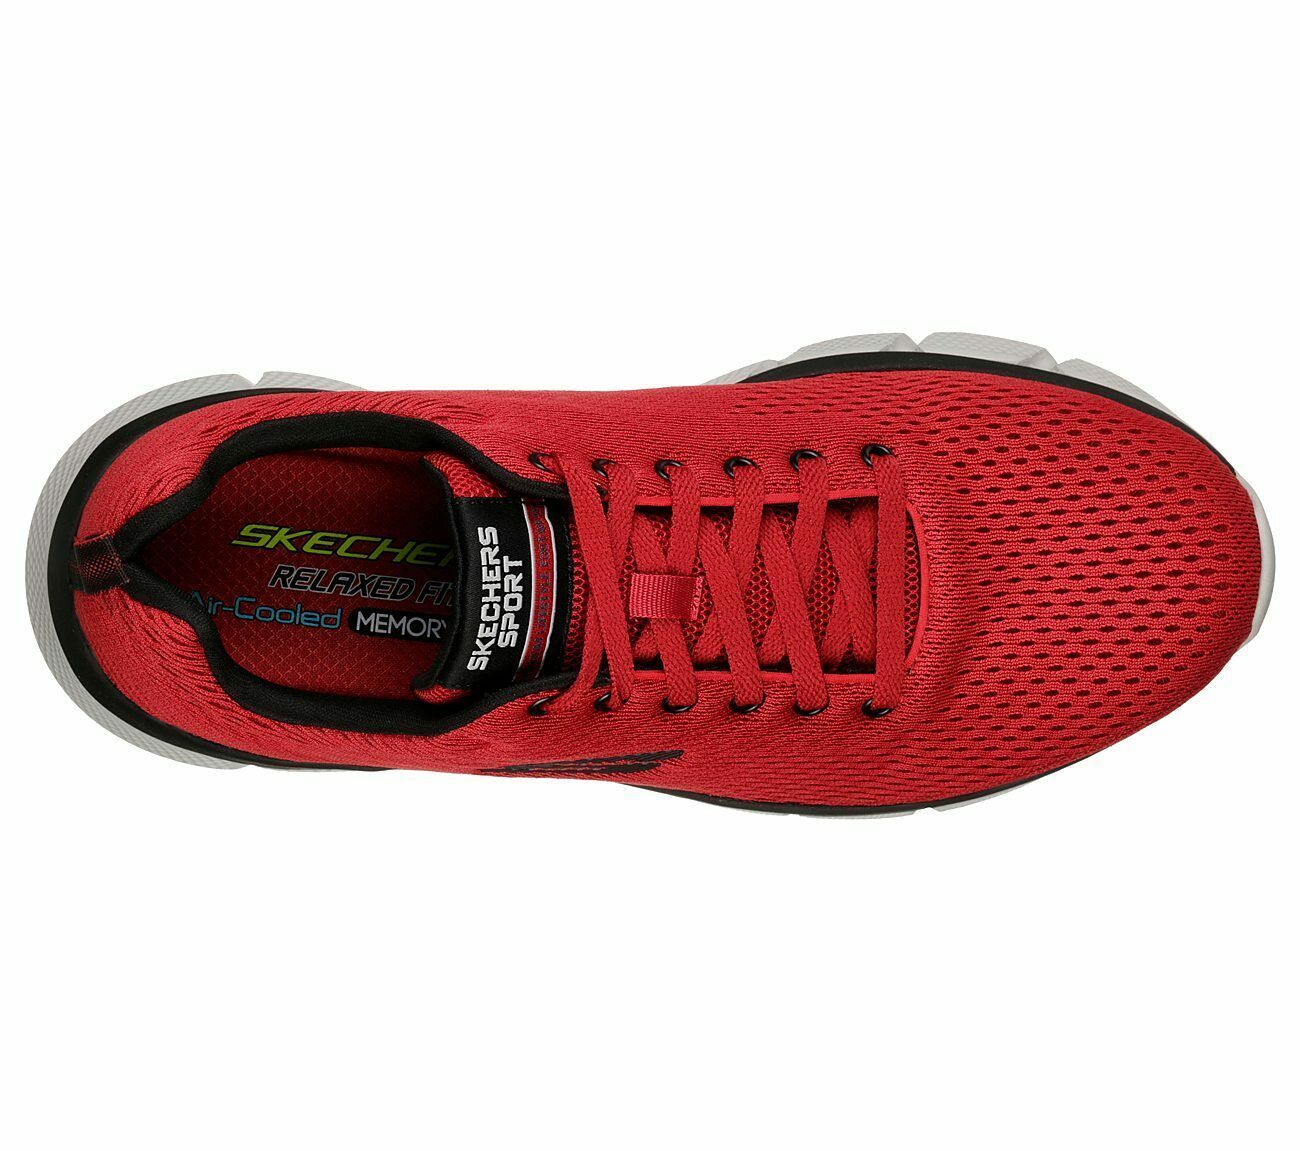 Skechers Red shoes Men Memory Foam Mesh Sport Athletic Comfort Casual ...